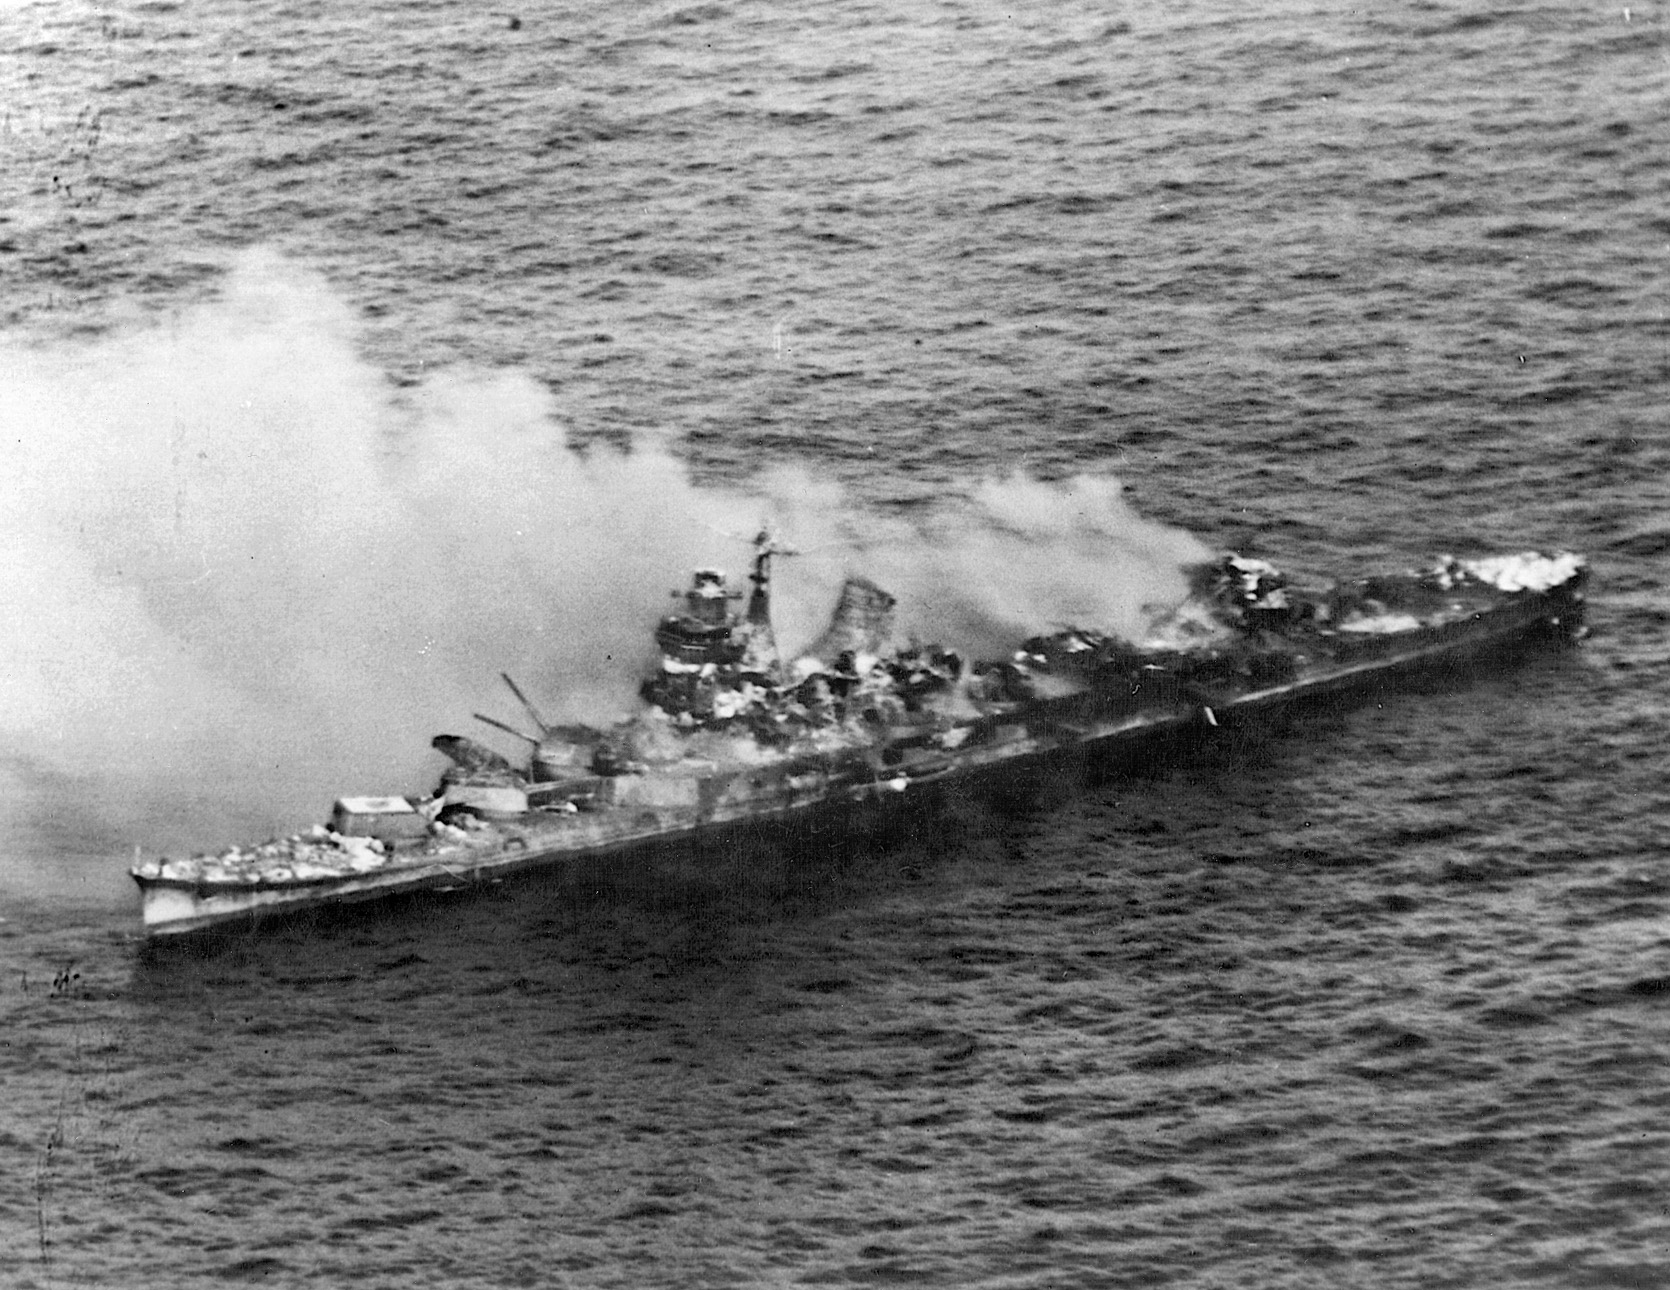 Japanese heavy cruiser Mikuma burns from strikes by Hornet and Enterprise planes. 